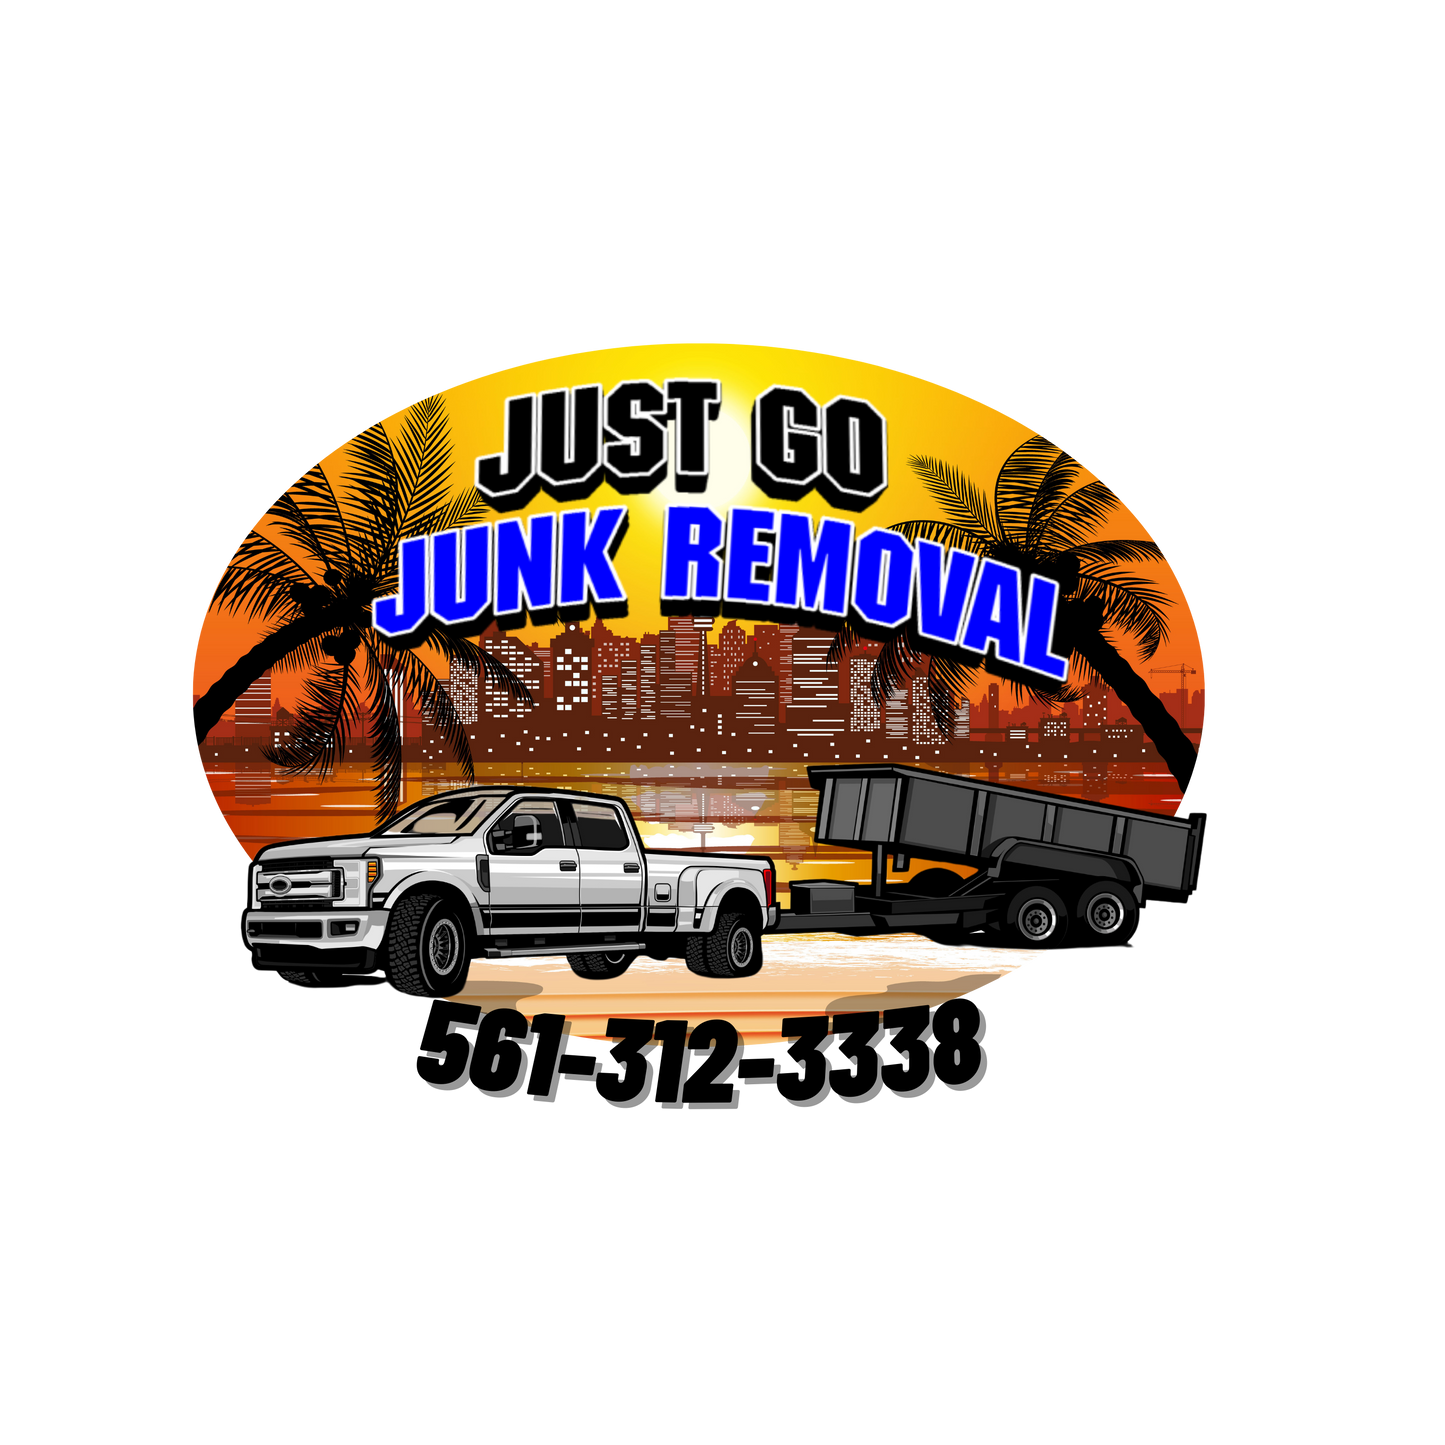 Junk Removal Logos